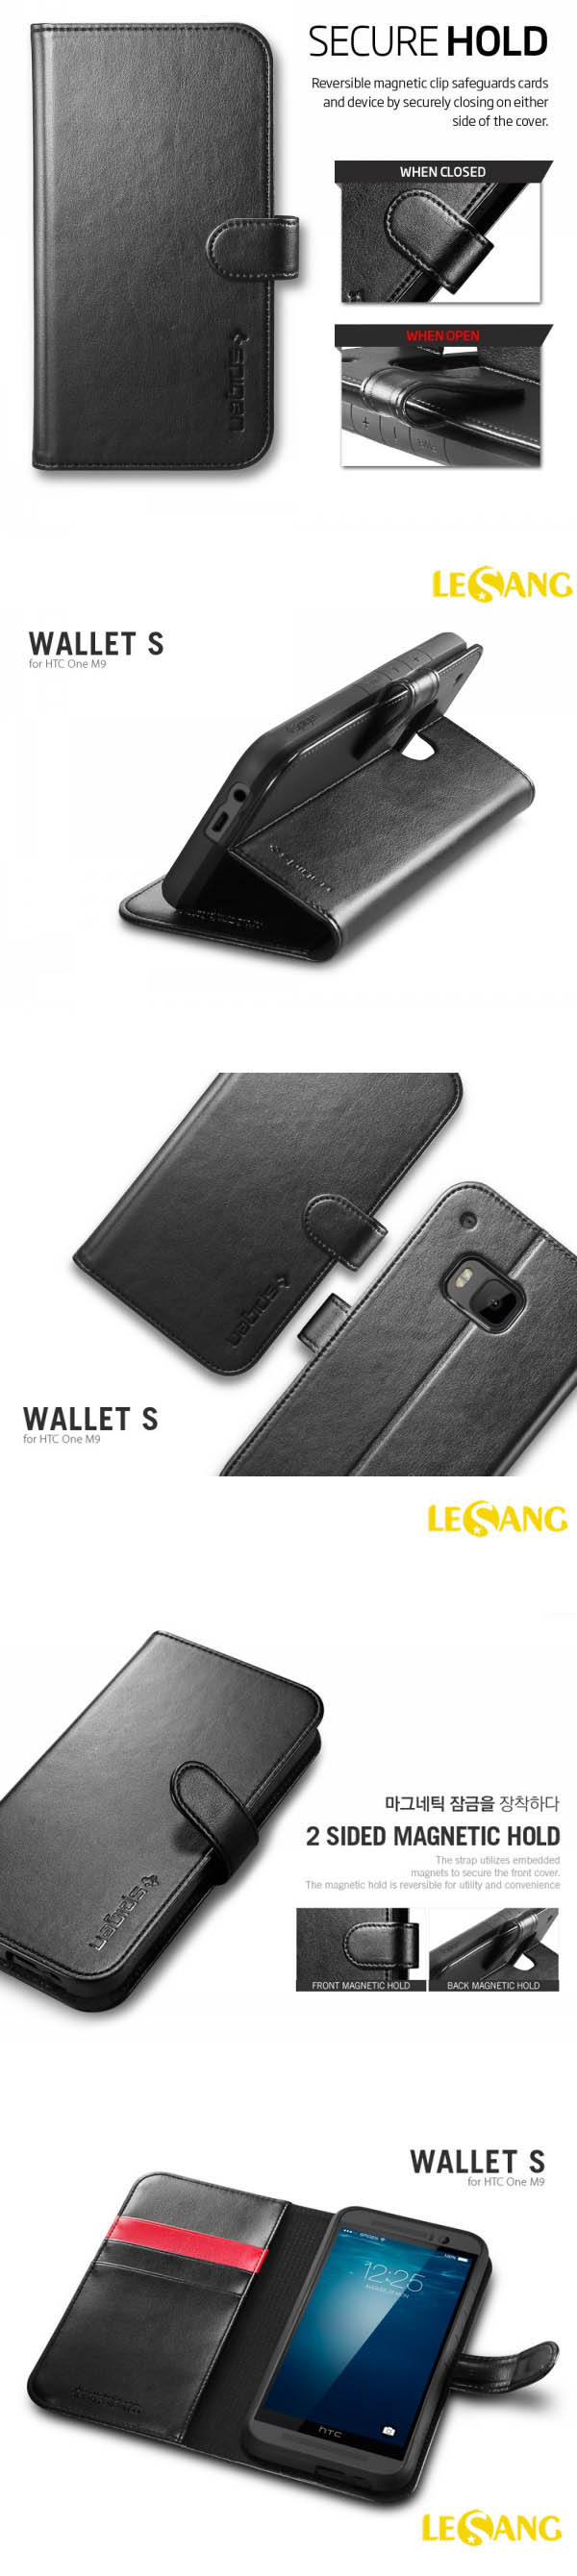 Bao da HTC One M9 SGP Wallet S (USA) 332